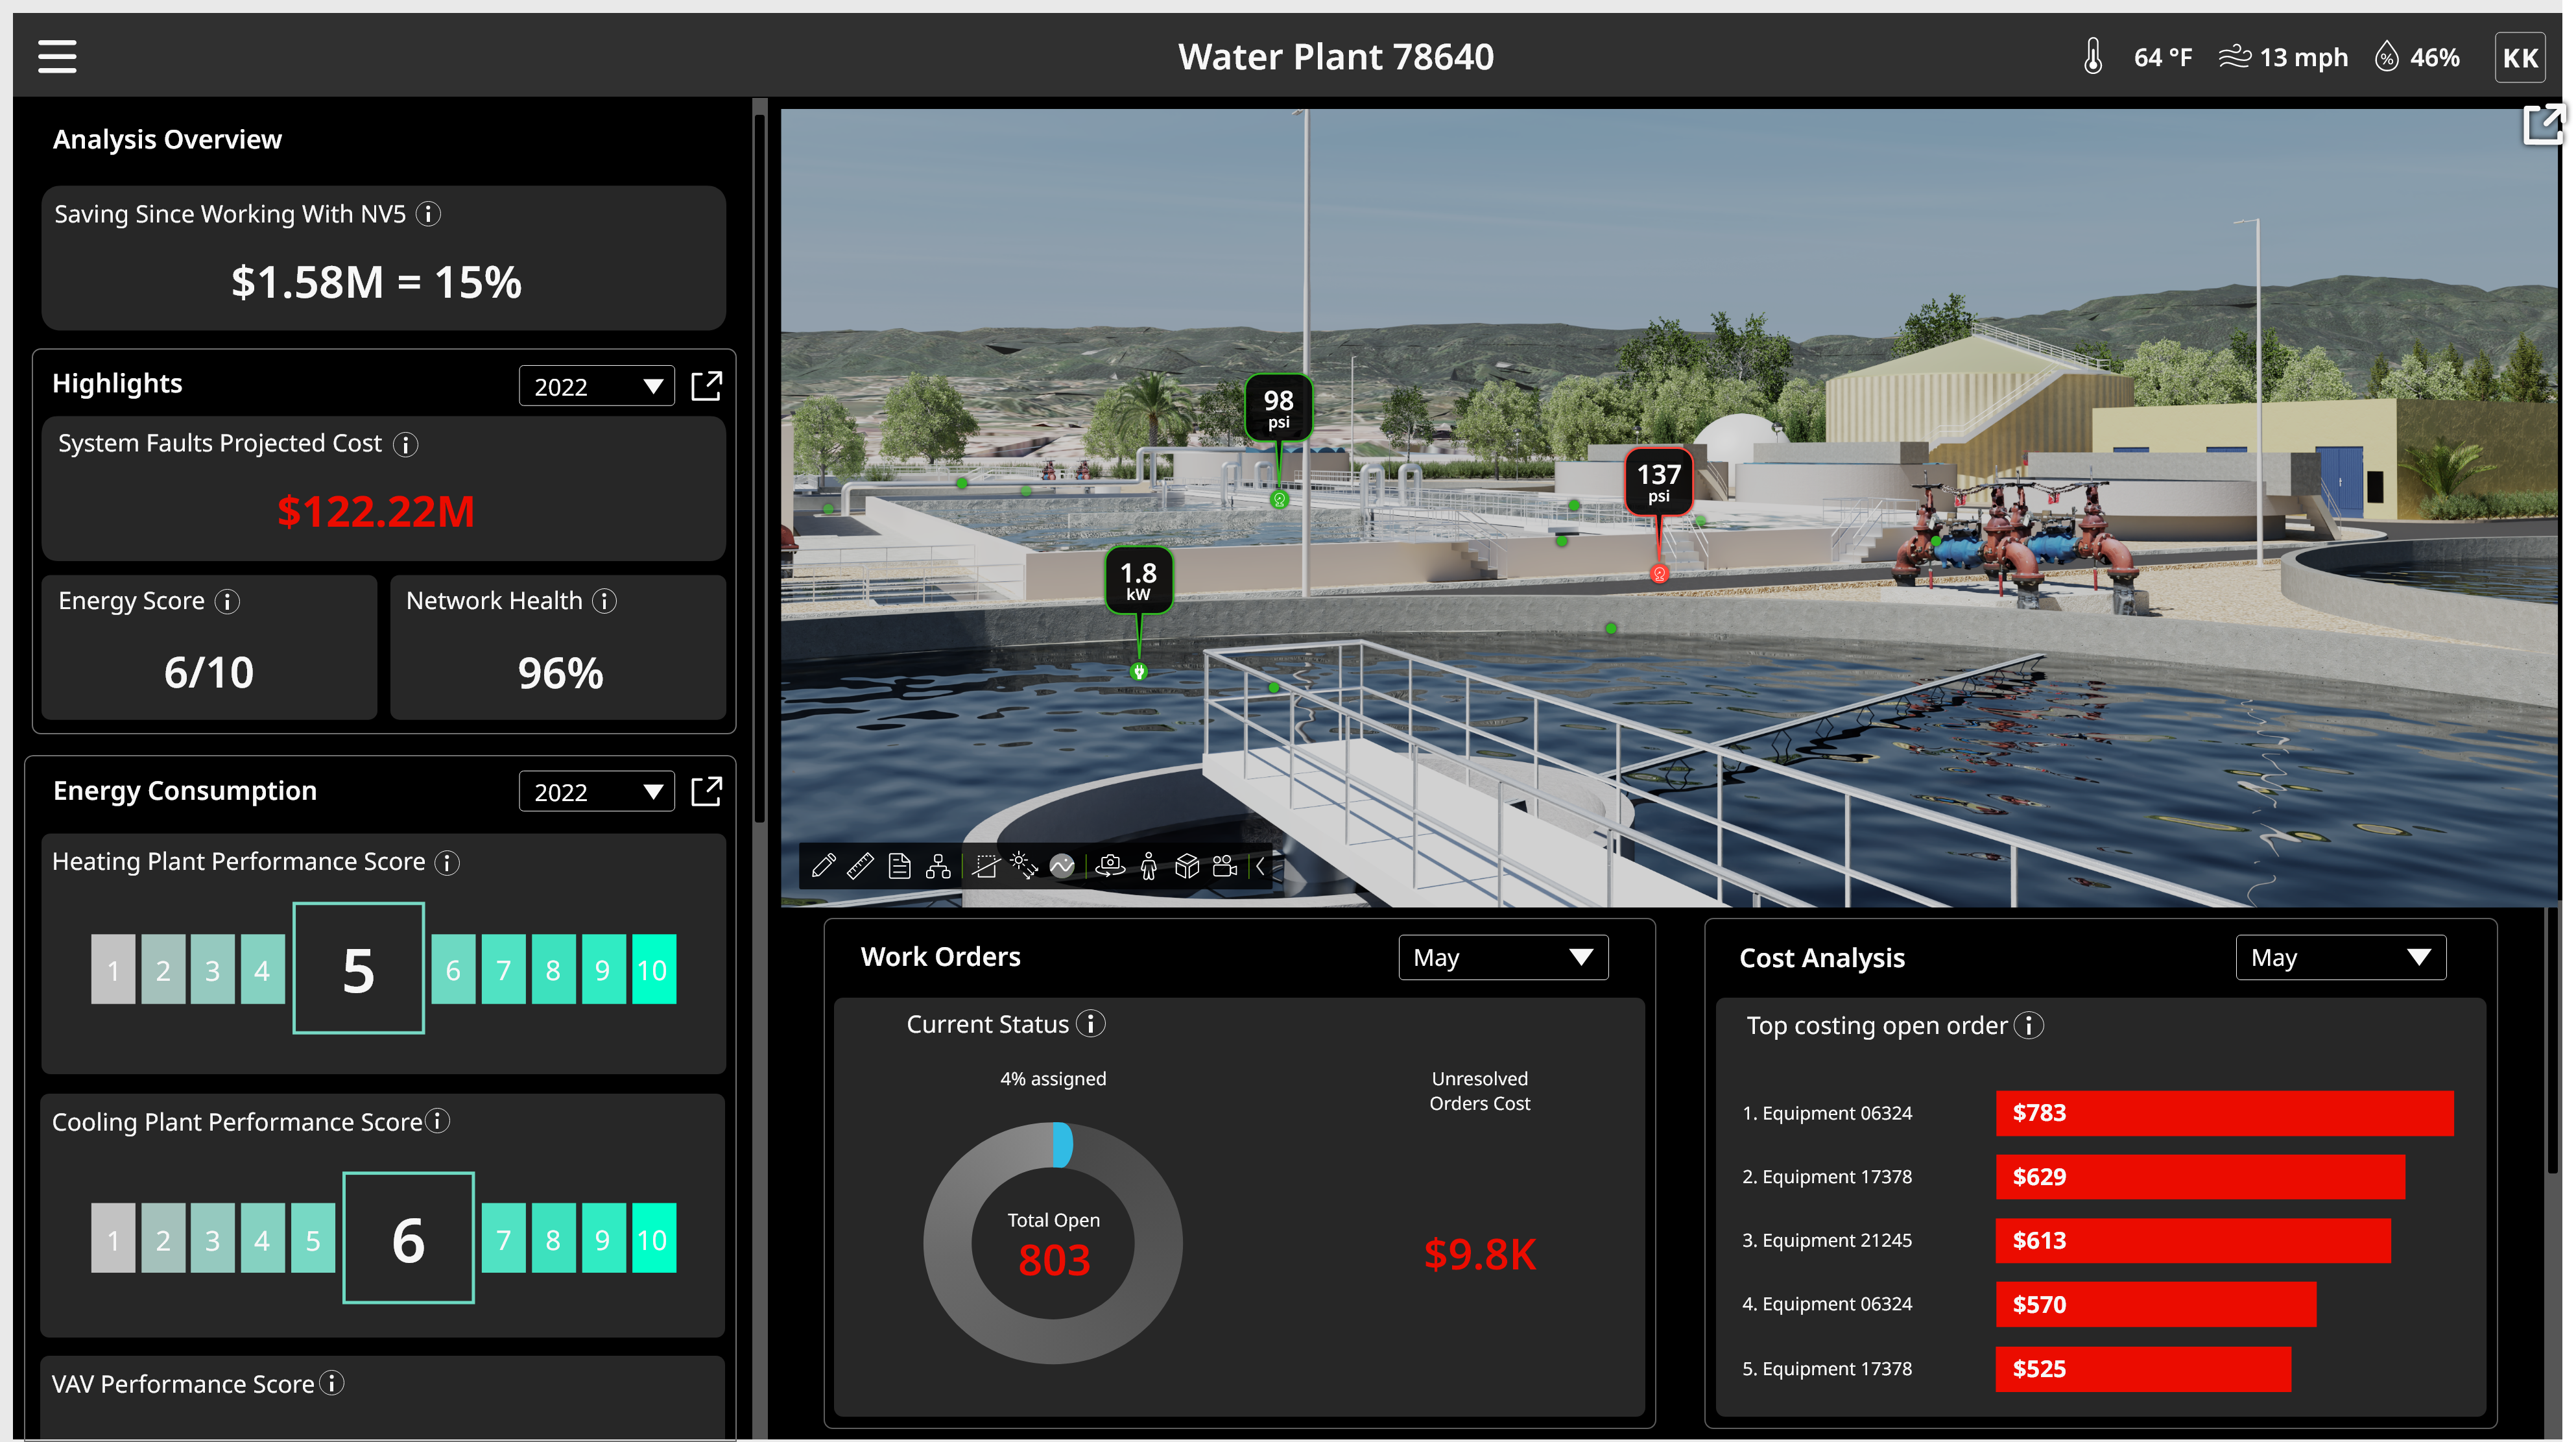 UrsaLeo's Digital Twin of the water plant with analytics dashboard